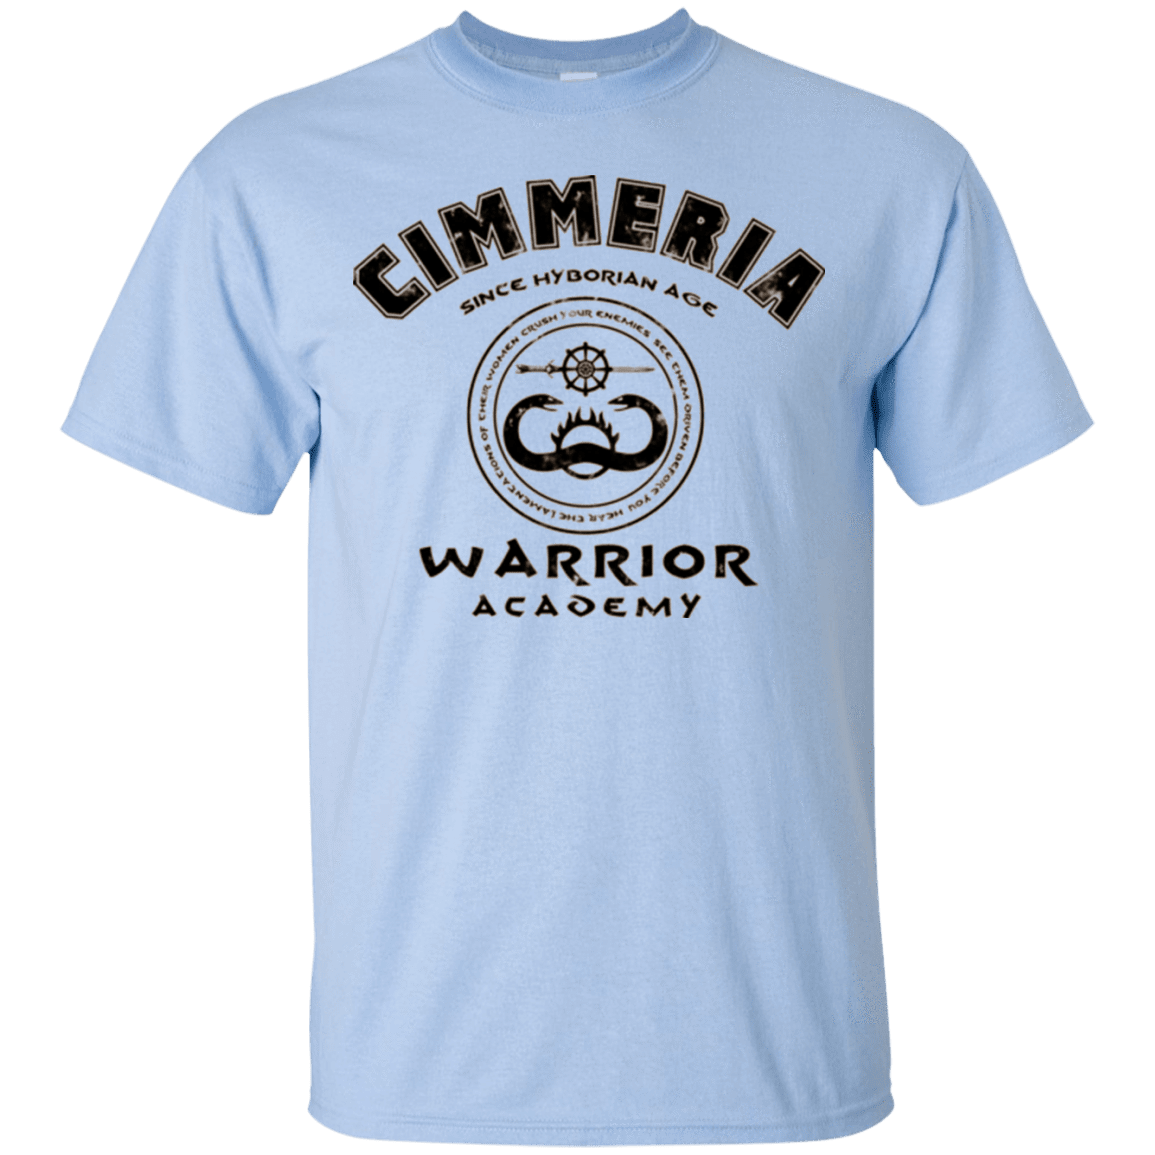 T-Shirts Light Blue / Small Crimmeria Warrior academy T-Shirt